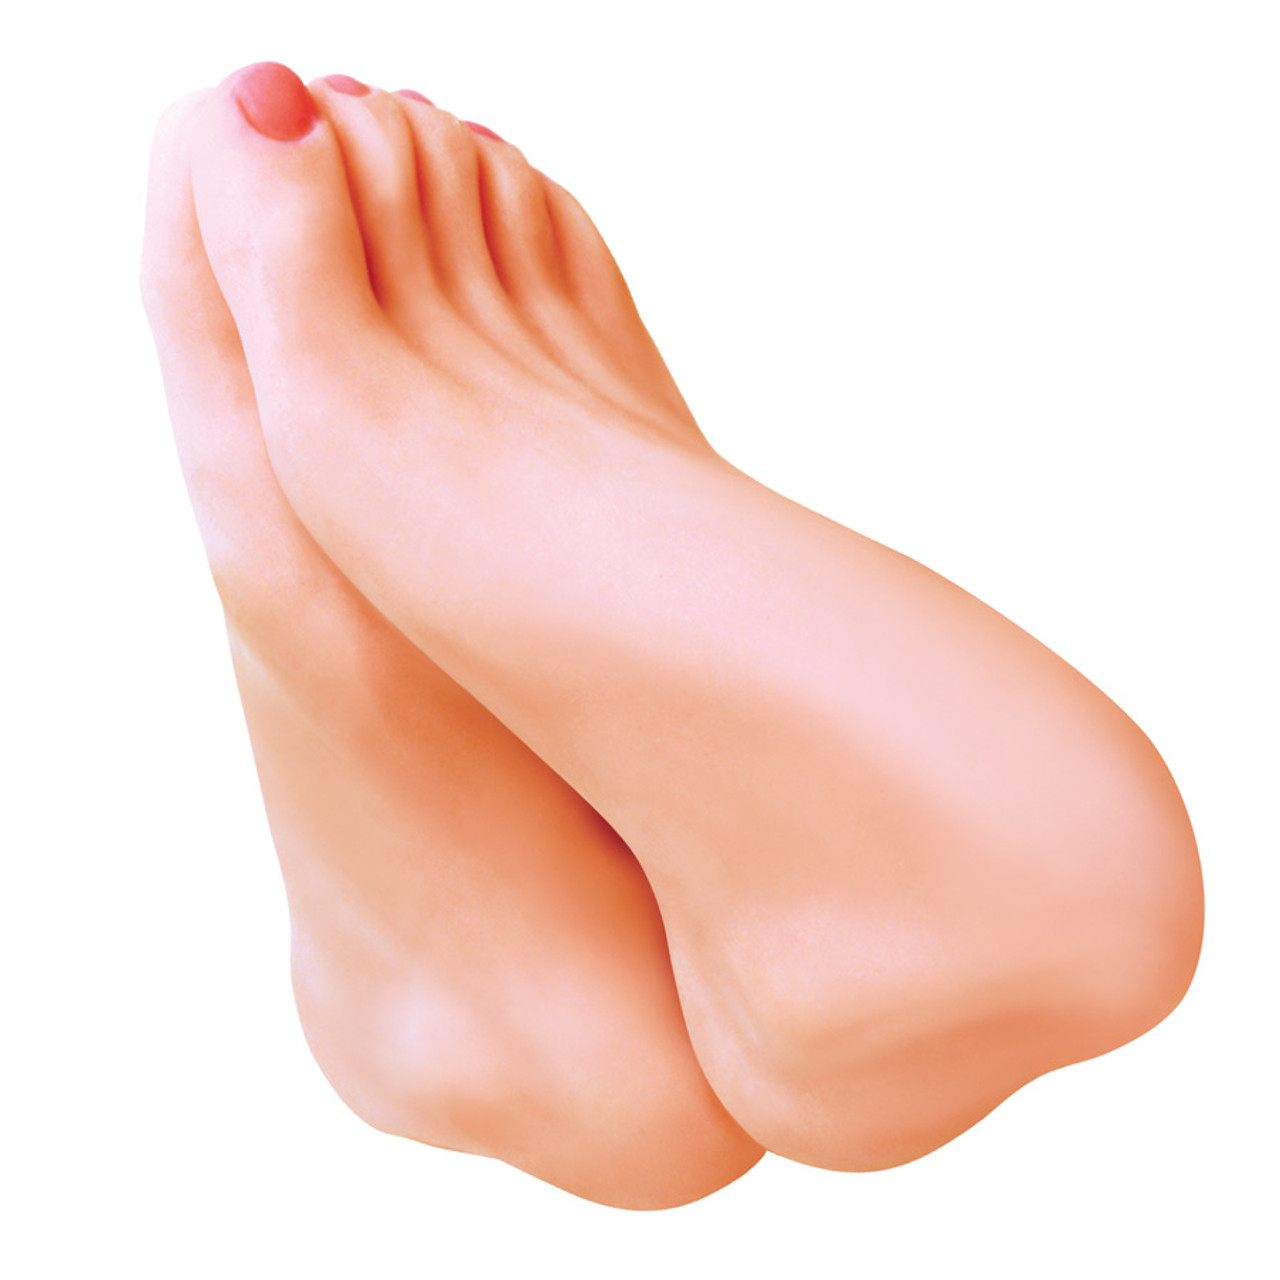 cindy jensen recommends Keisha Gray Feet